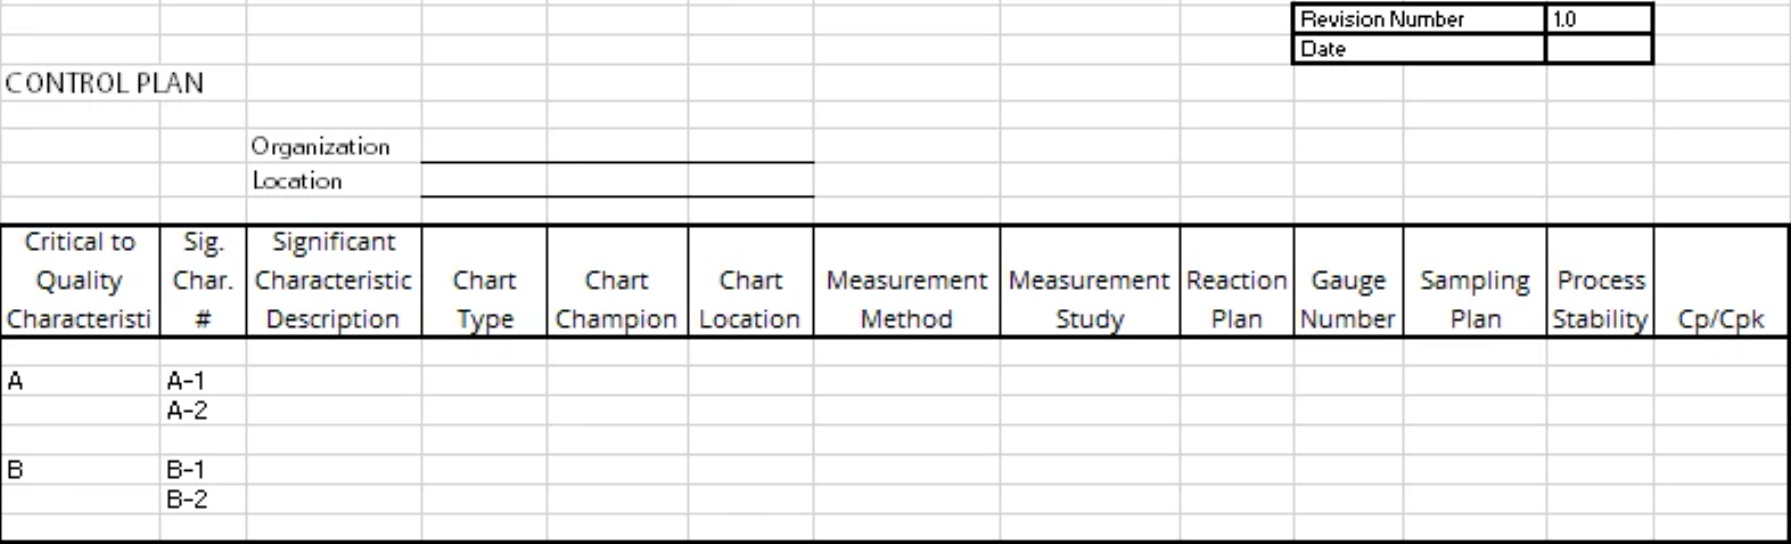 Control Plan Example spreadsheet